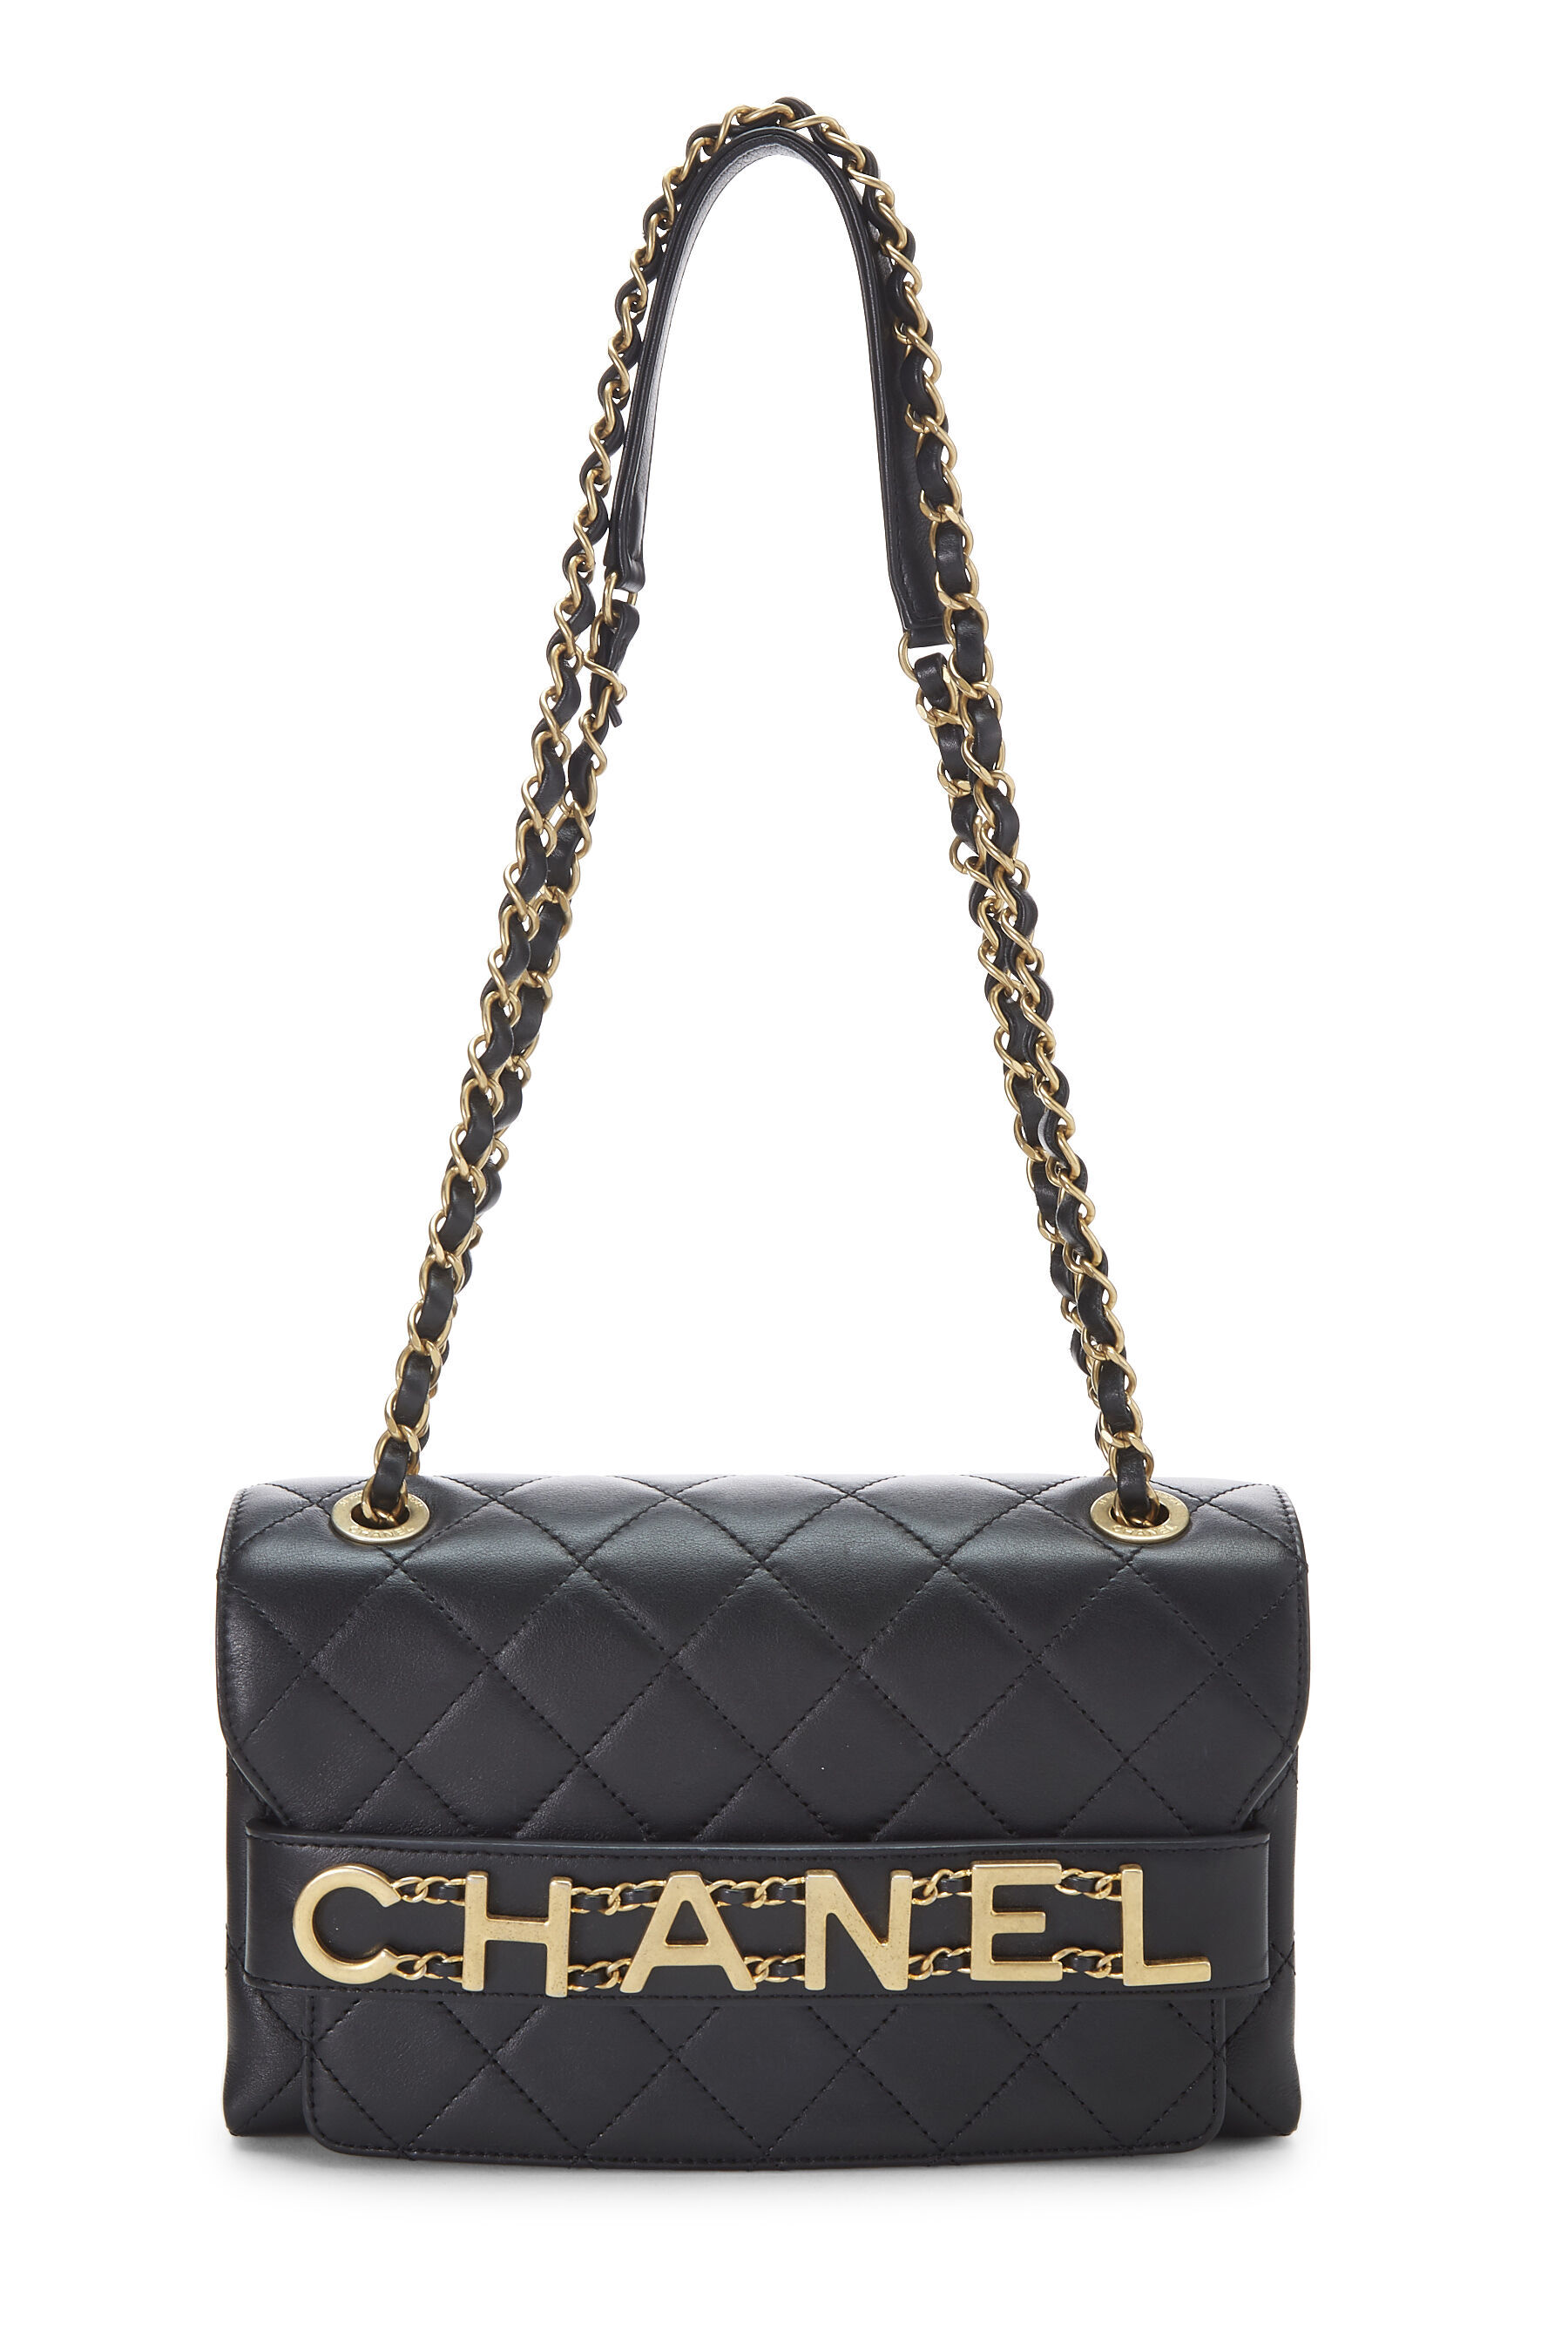 Shop Vintage Chanel Bags | Pre-Owned Chanel Bag | WGACA